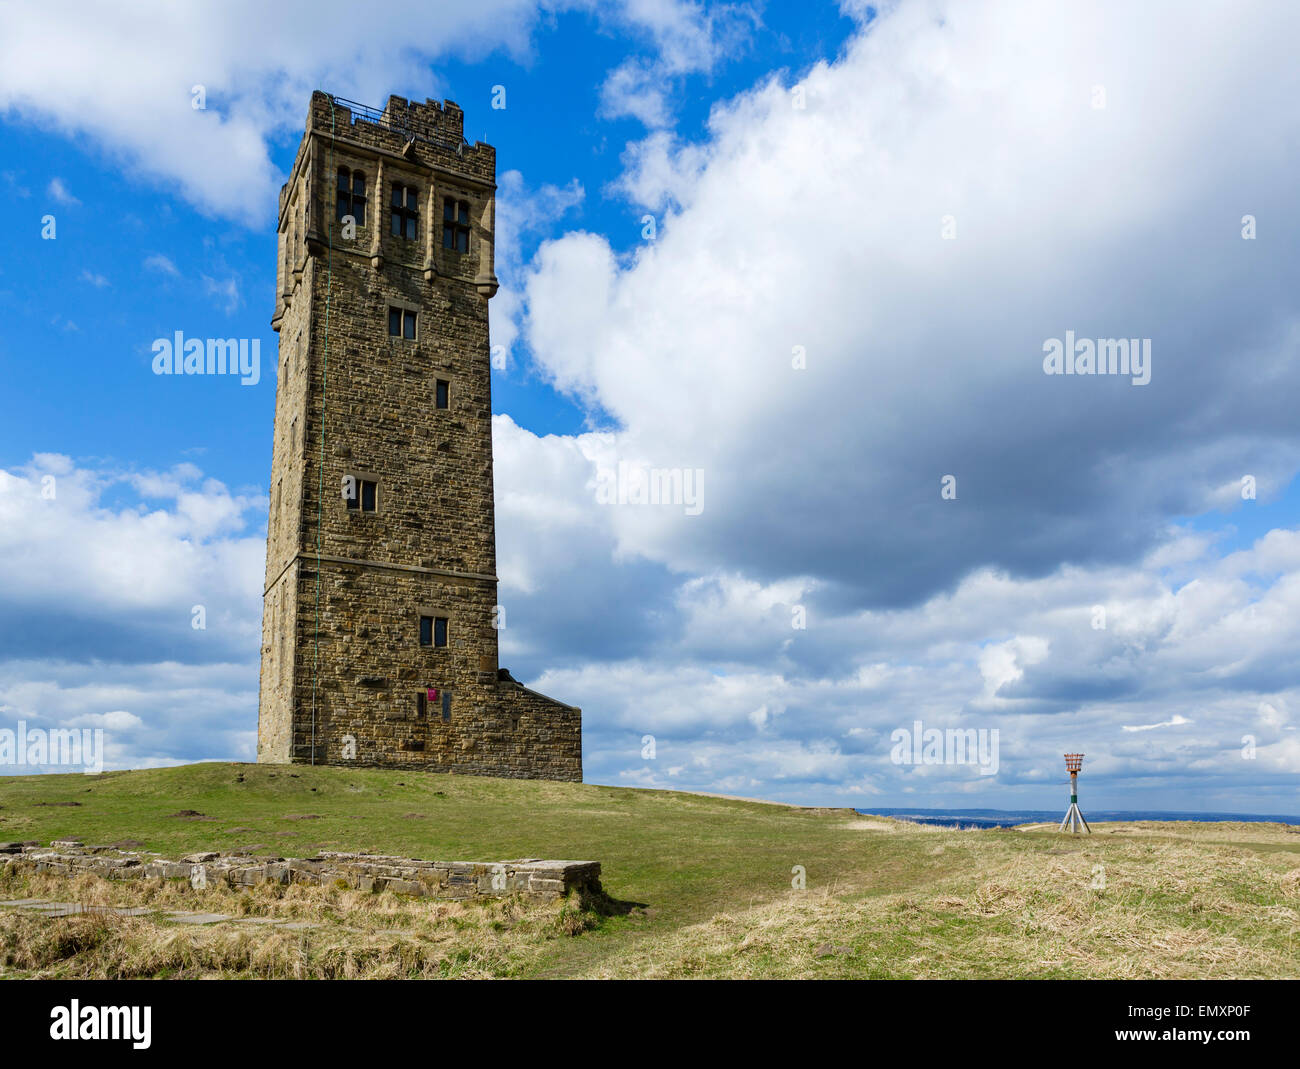 Jubileo o torre de Victoria en la Colina del Castillo, Huddersfield, West Yorkshire, Inglaterra Foto de stock